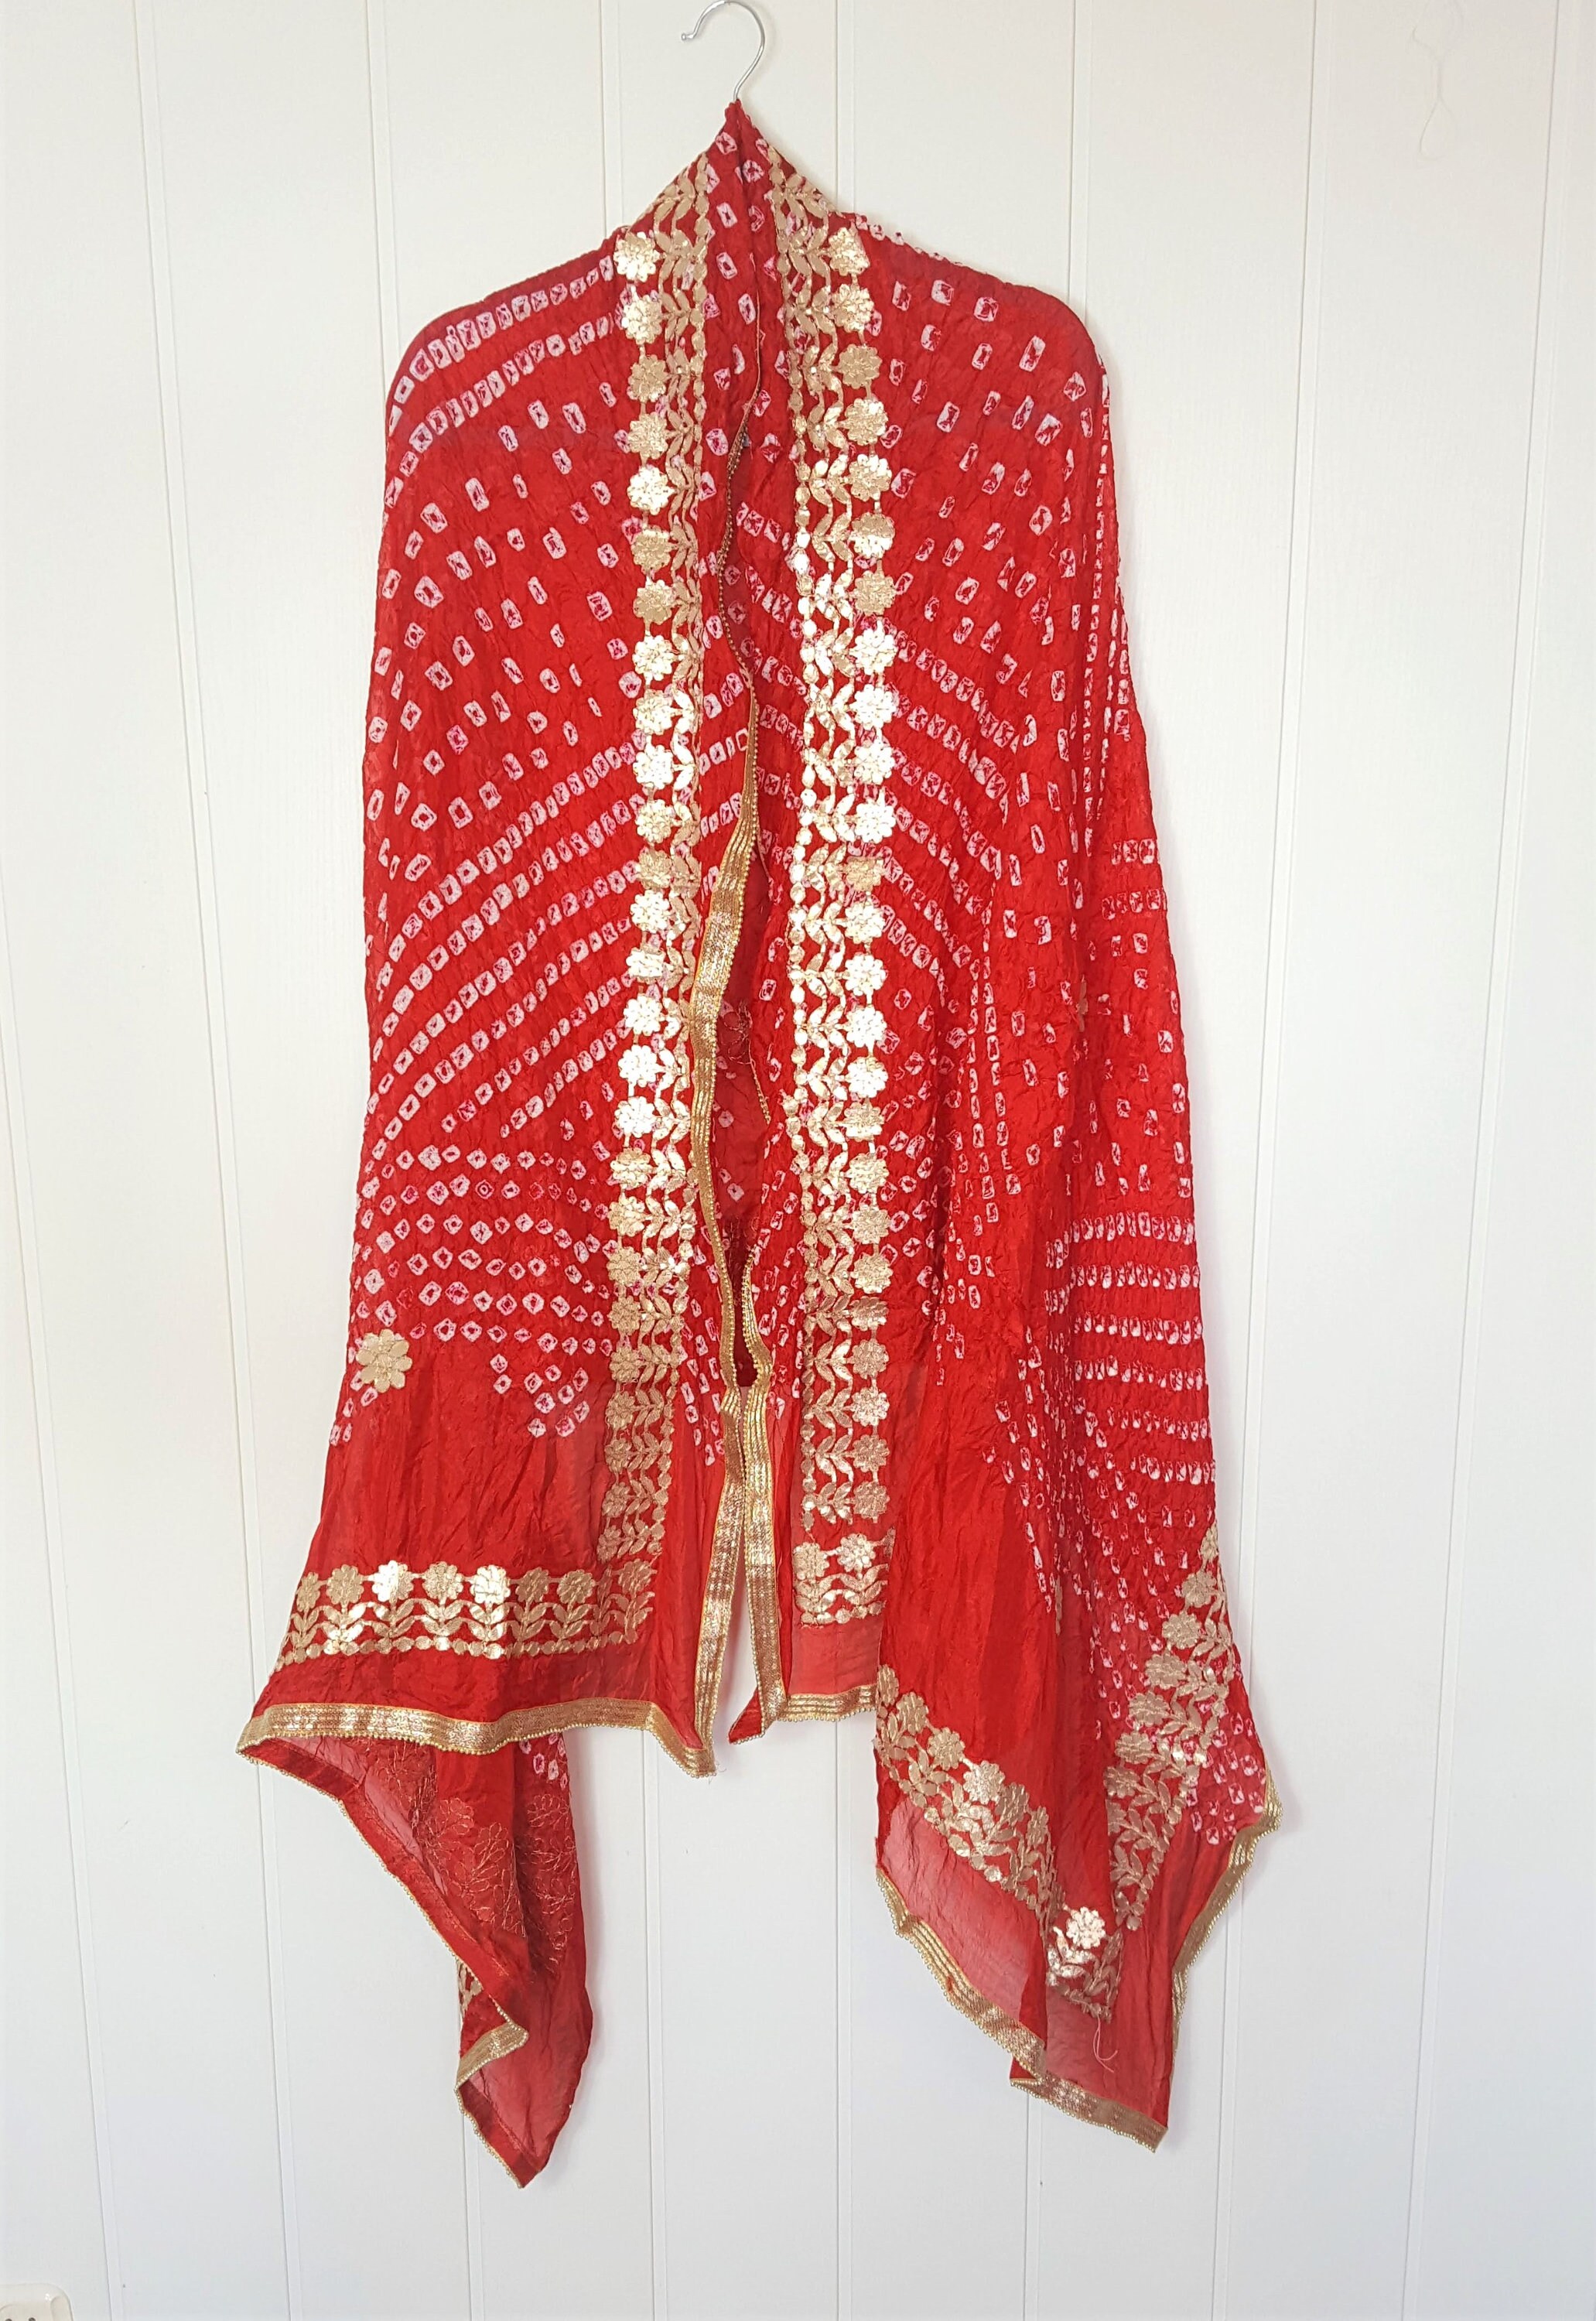 New Indian Pakistani chunri dupatta scarf red golden ethnic | Etsy